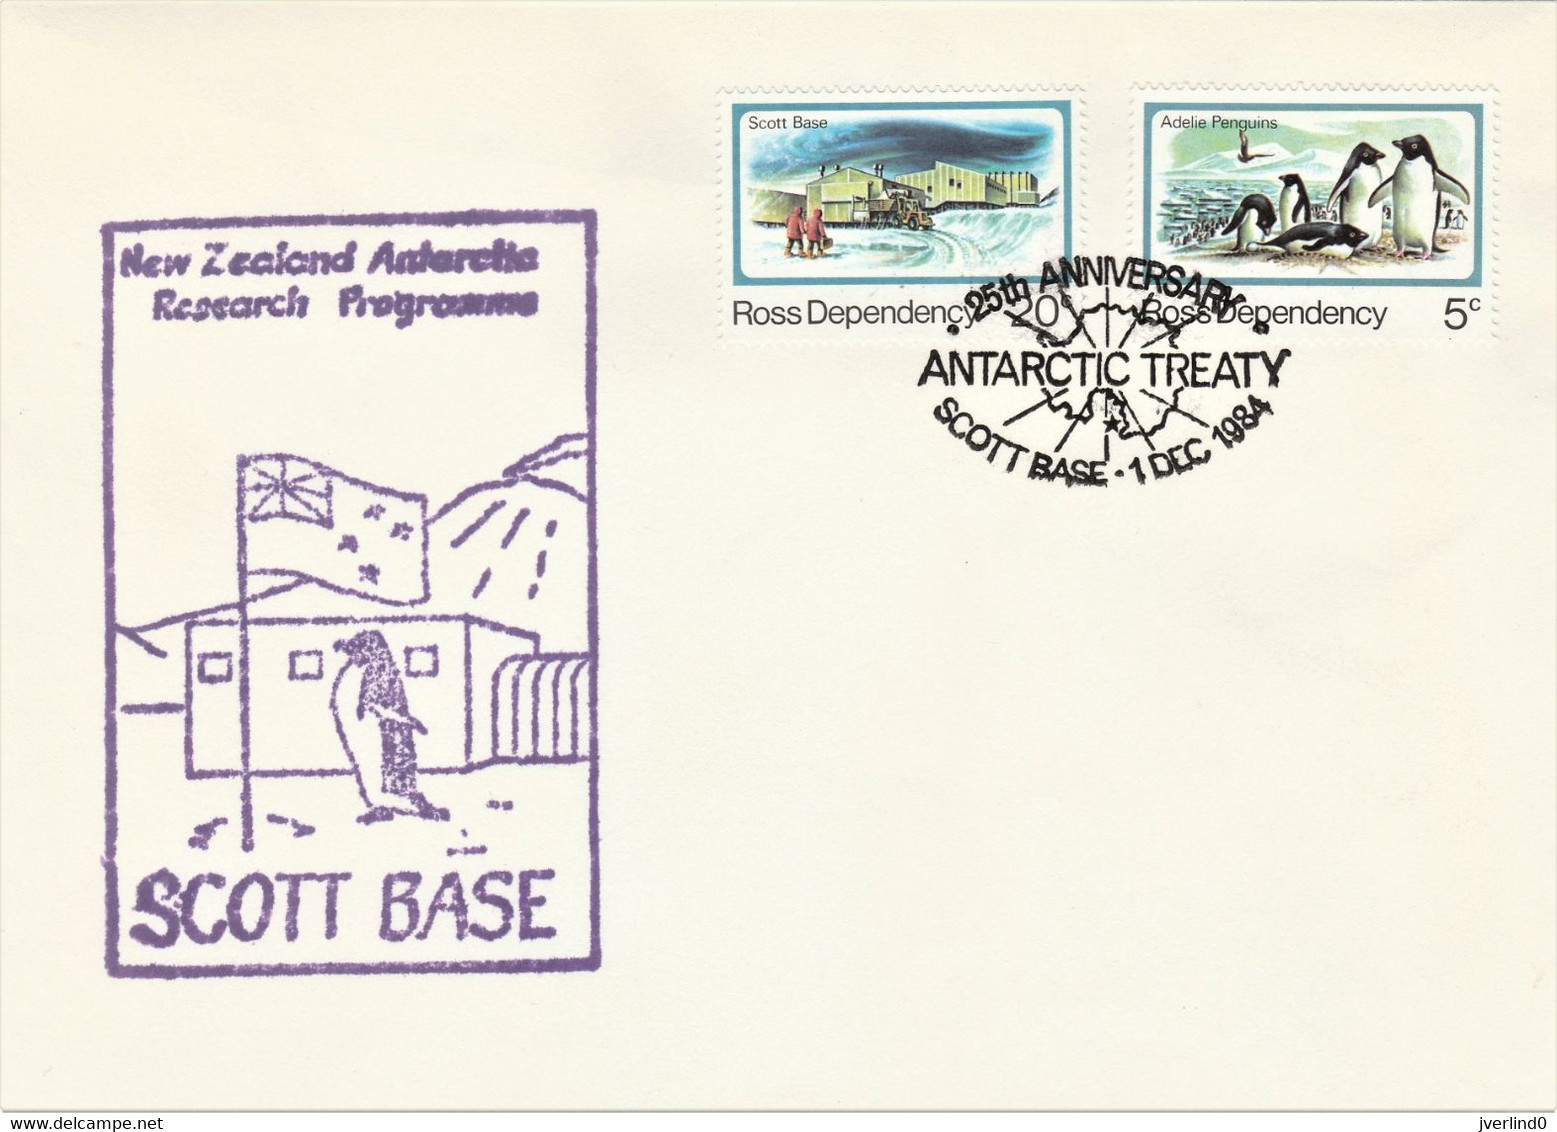 Ross Dependency 1984 Scott Base Antarctic Treaty Cancel - Covers & Documents